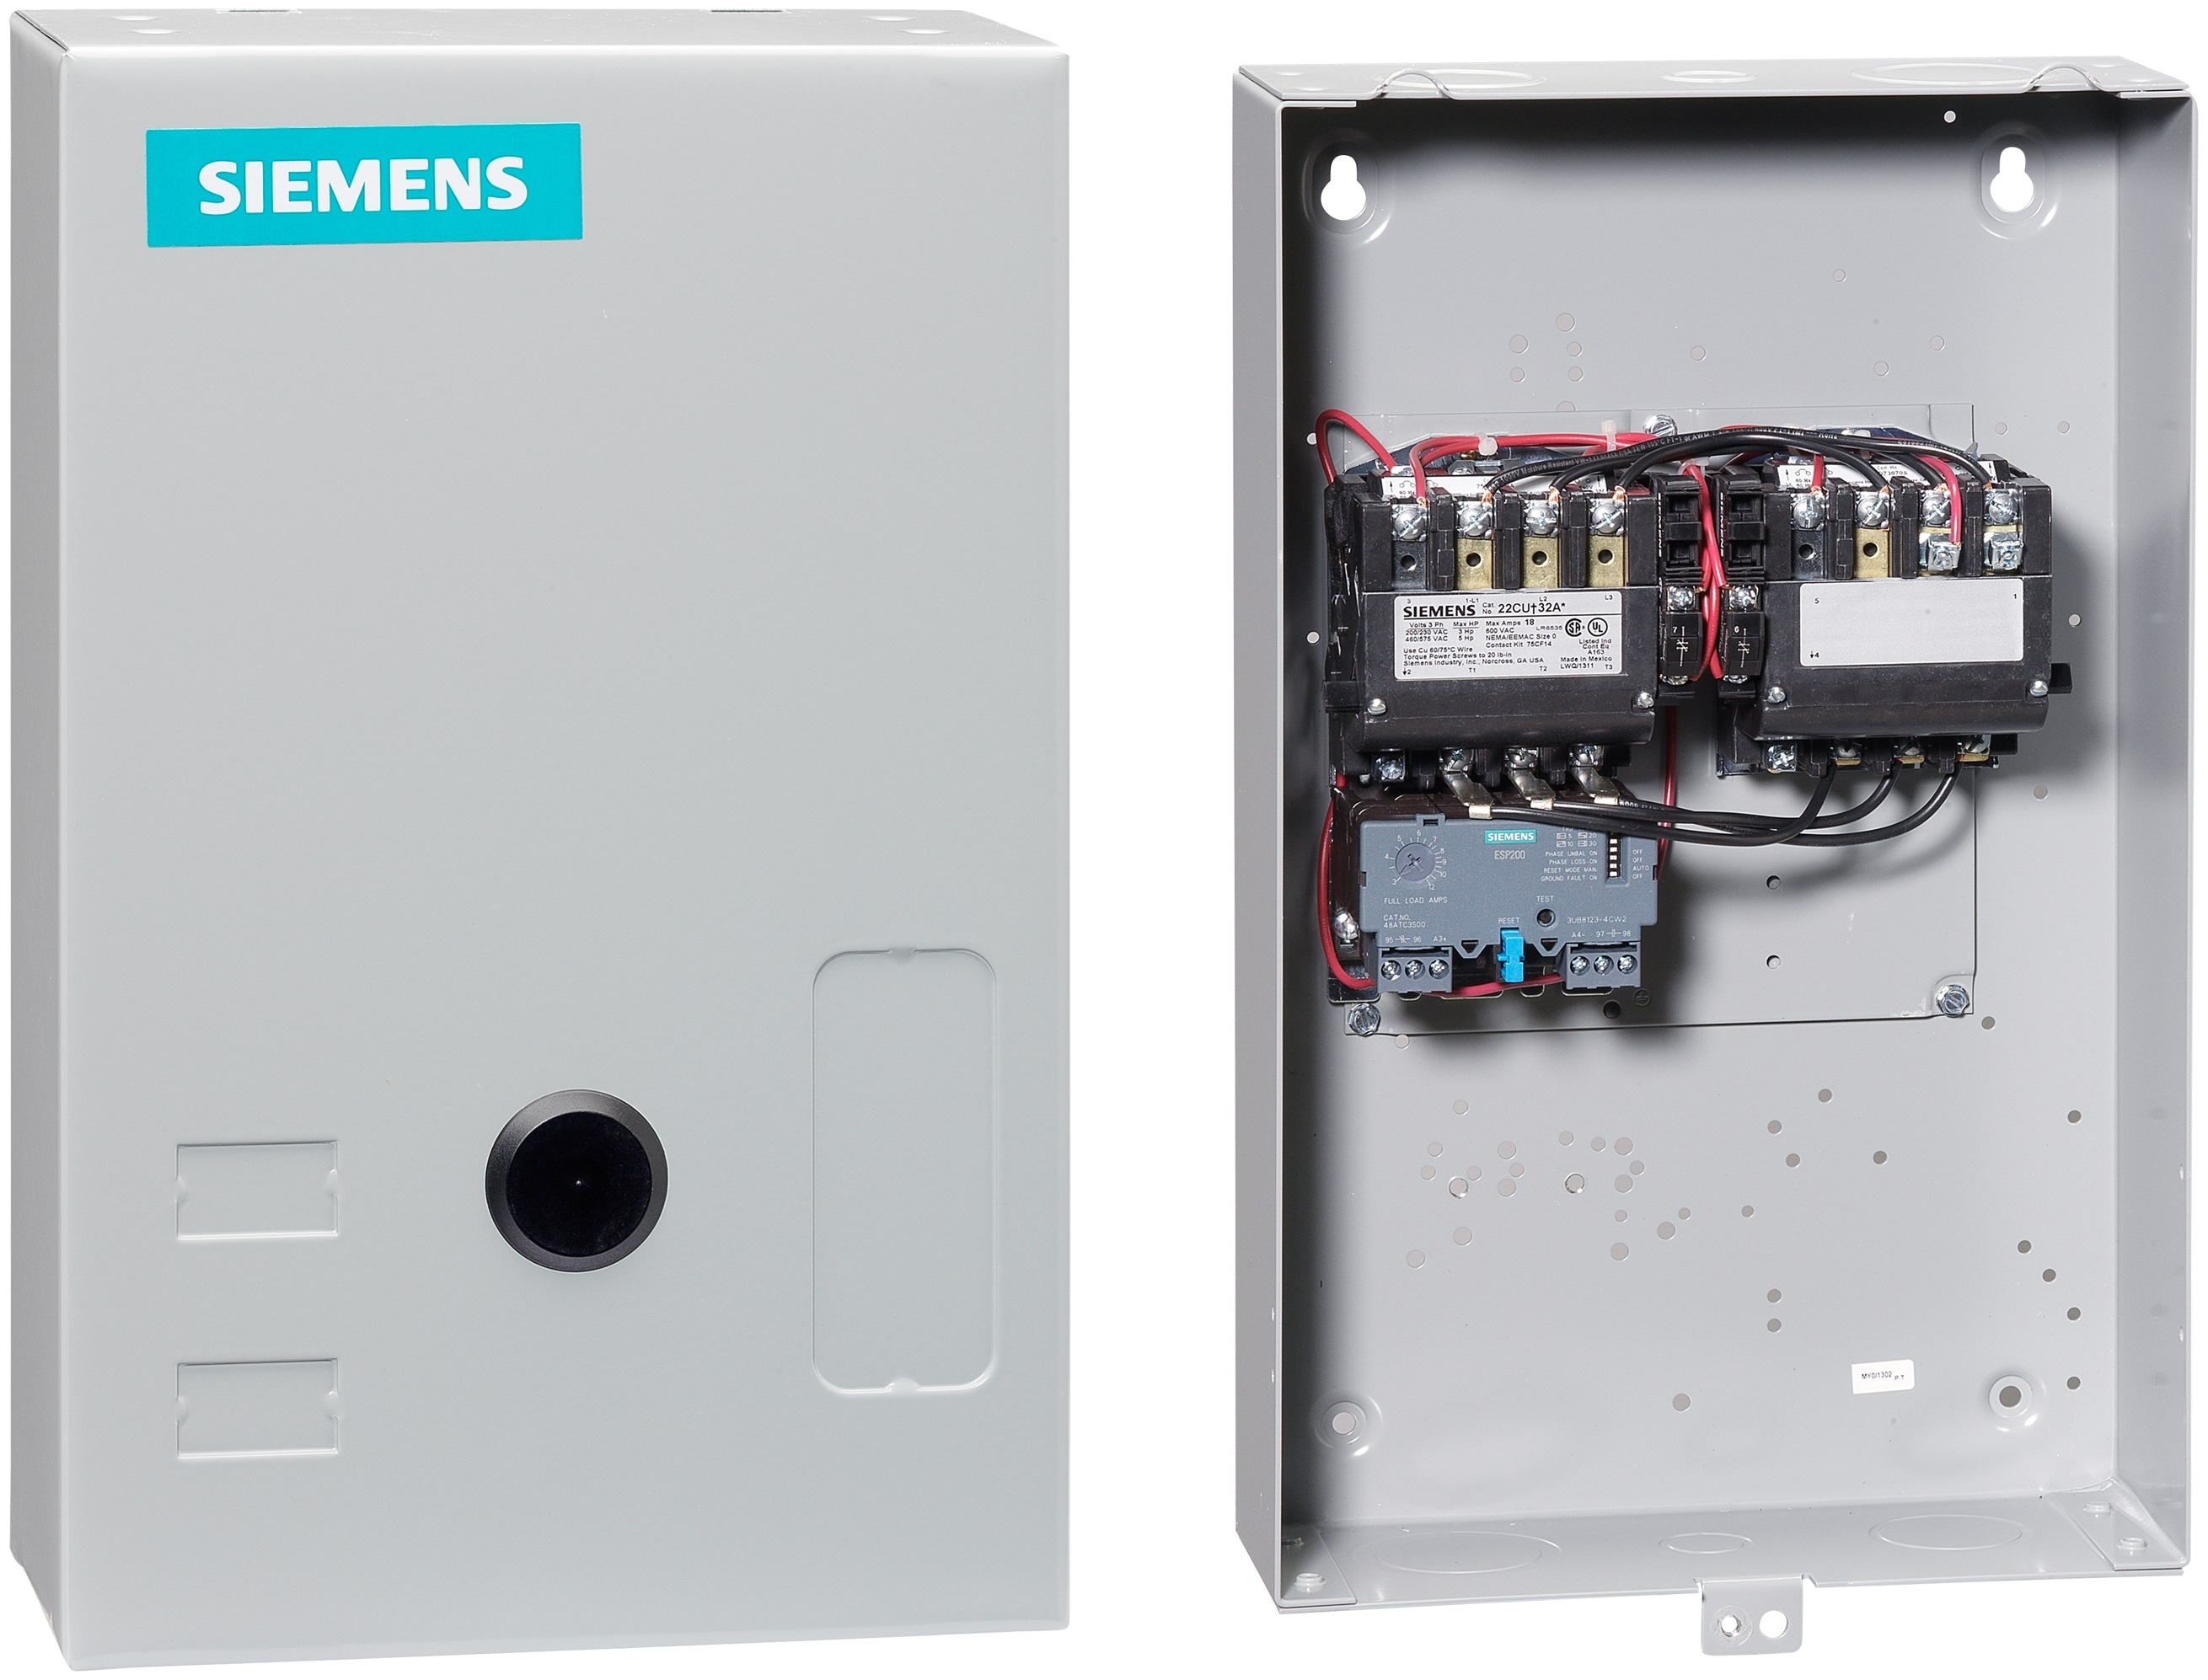 Siemens (Furnas) Pump Control Panels